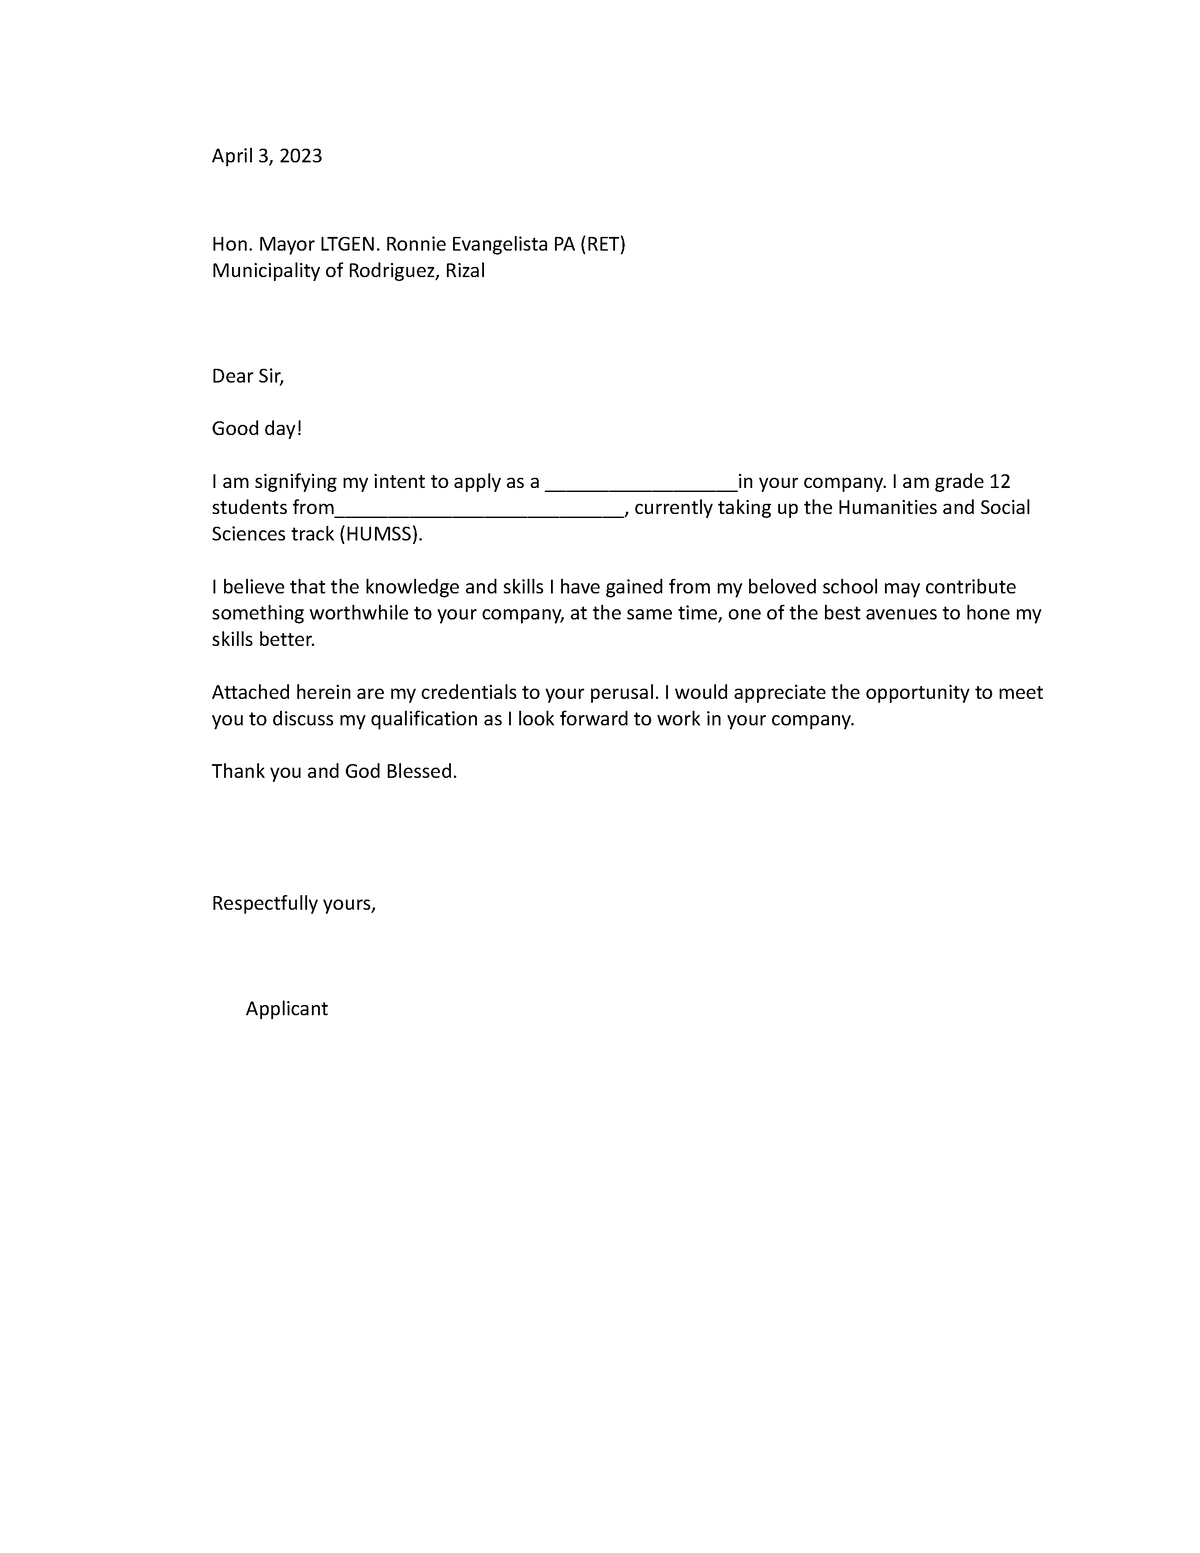 Application letter - good in reference. - April 3, 2023 Hon. Mayor ...